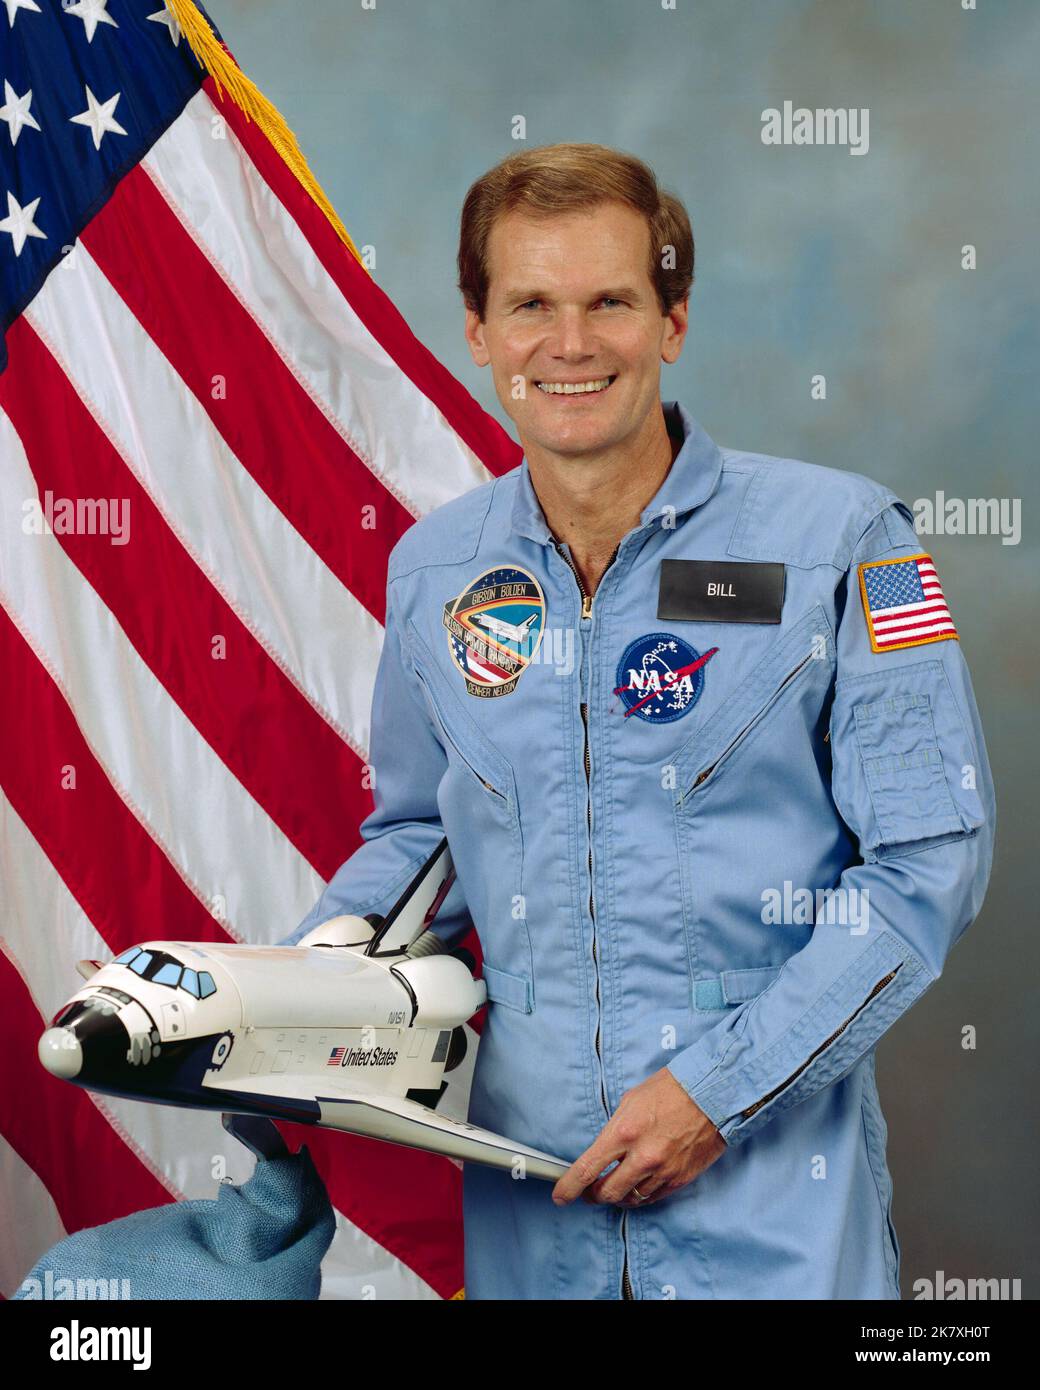 Offizielles Porträt des Kongressabgeordneten Bill Nelson, US-Repräsentantenhaus - Florida, STS 61-C Nutzlastspezialist. Stockfoto